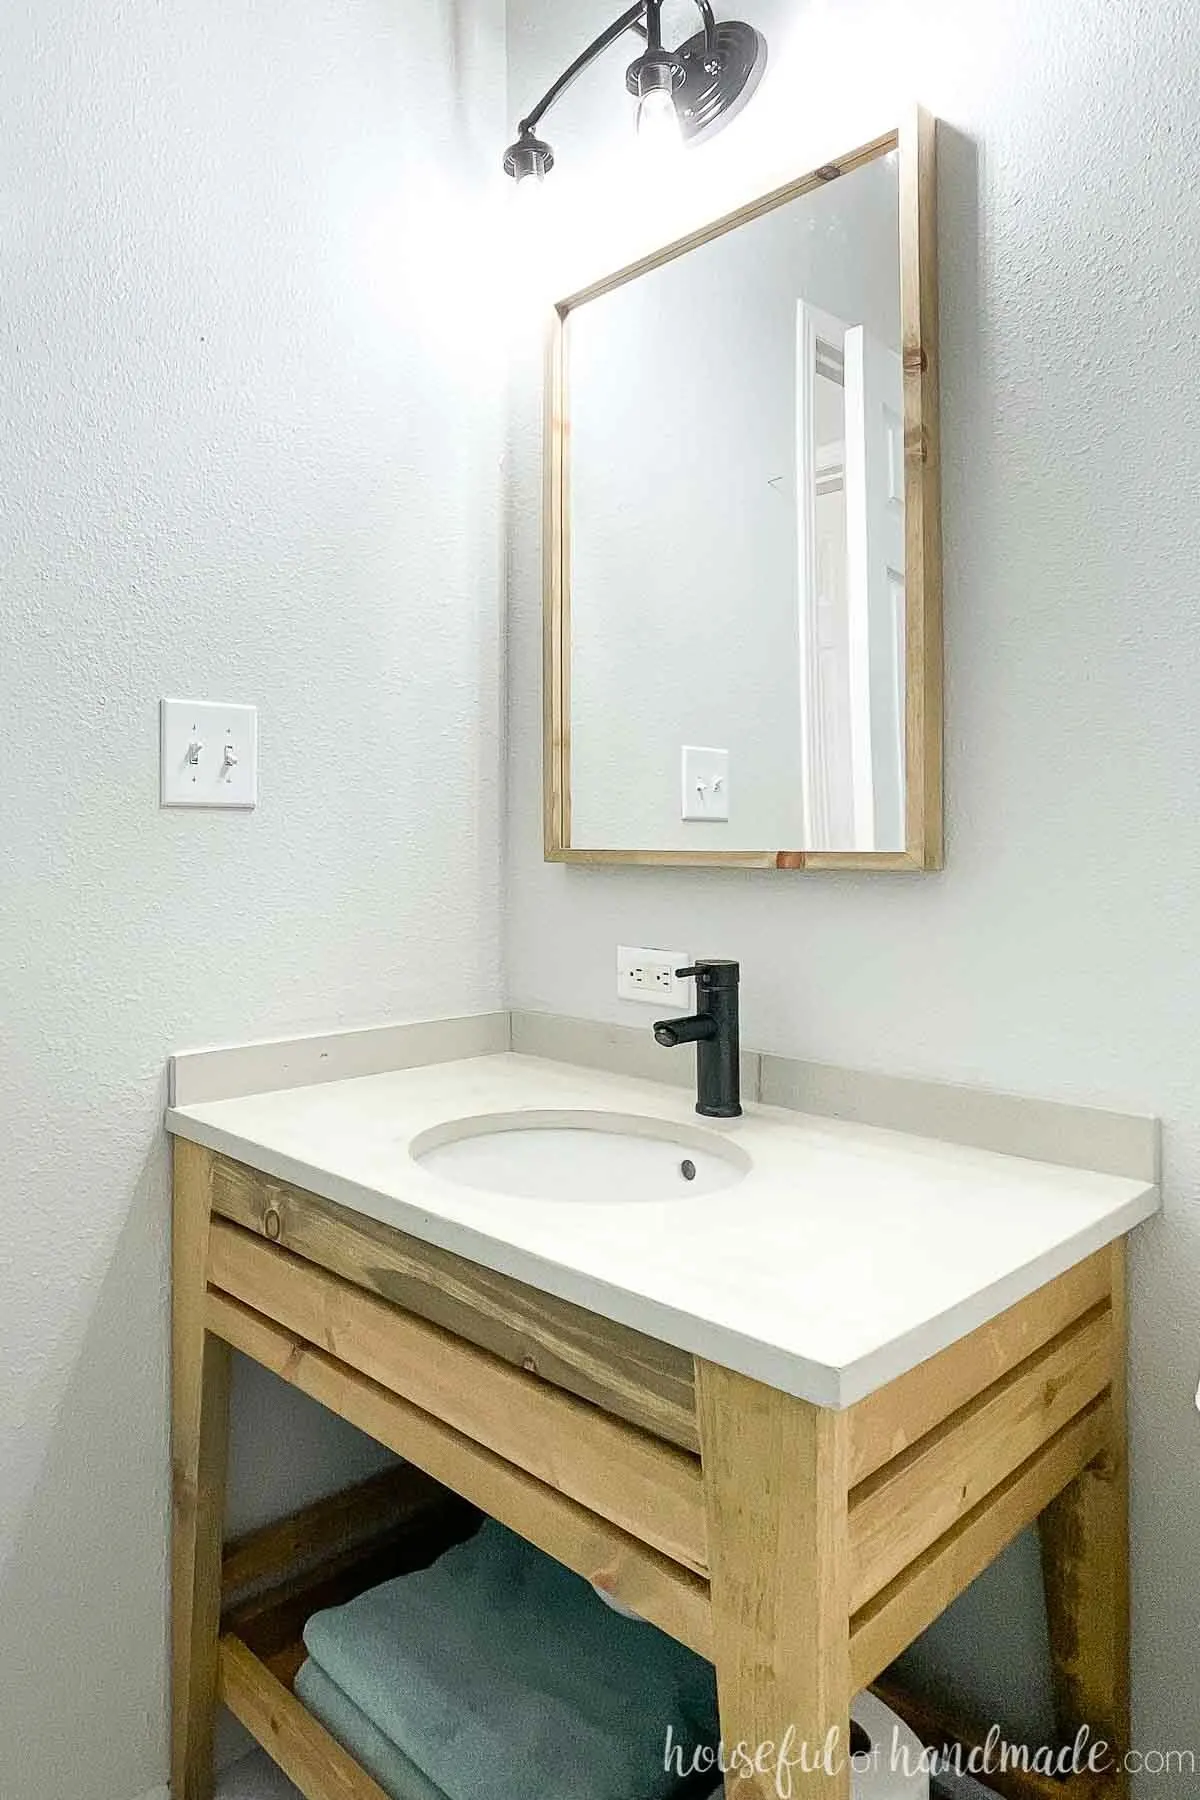 Corner view of the budget bathroom vanity remodel showing the DIY concrete vanity top on the open wood vanity. 